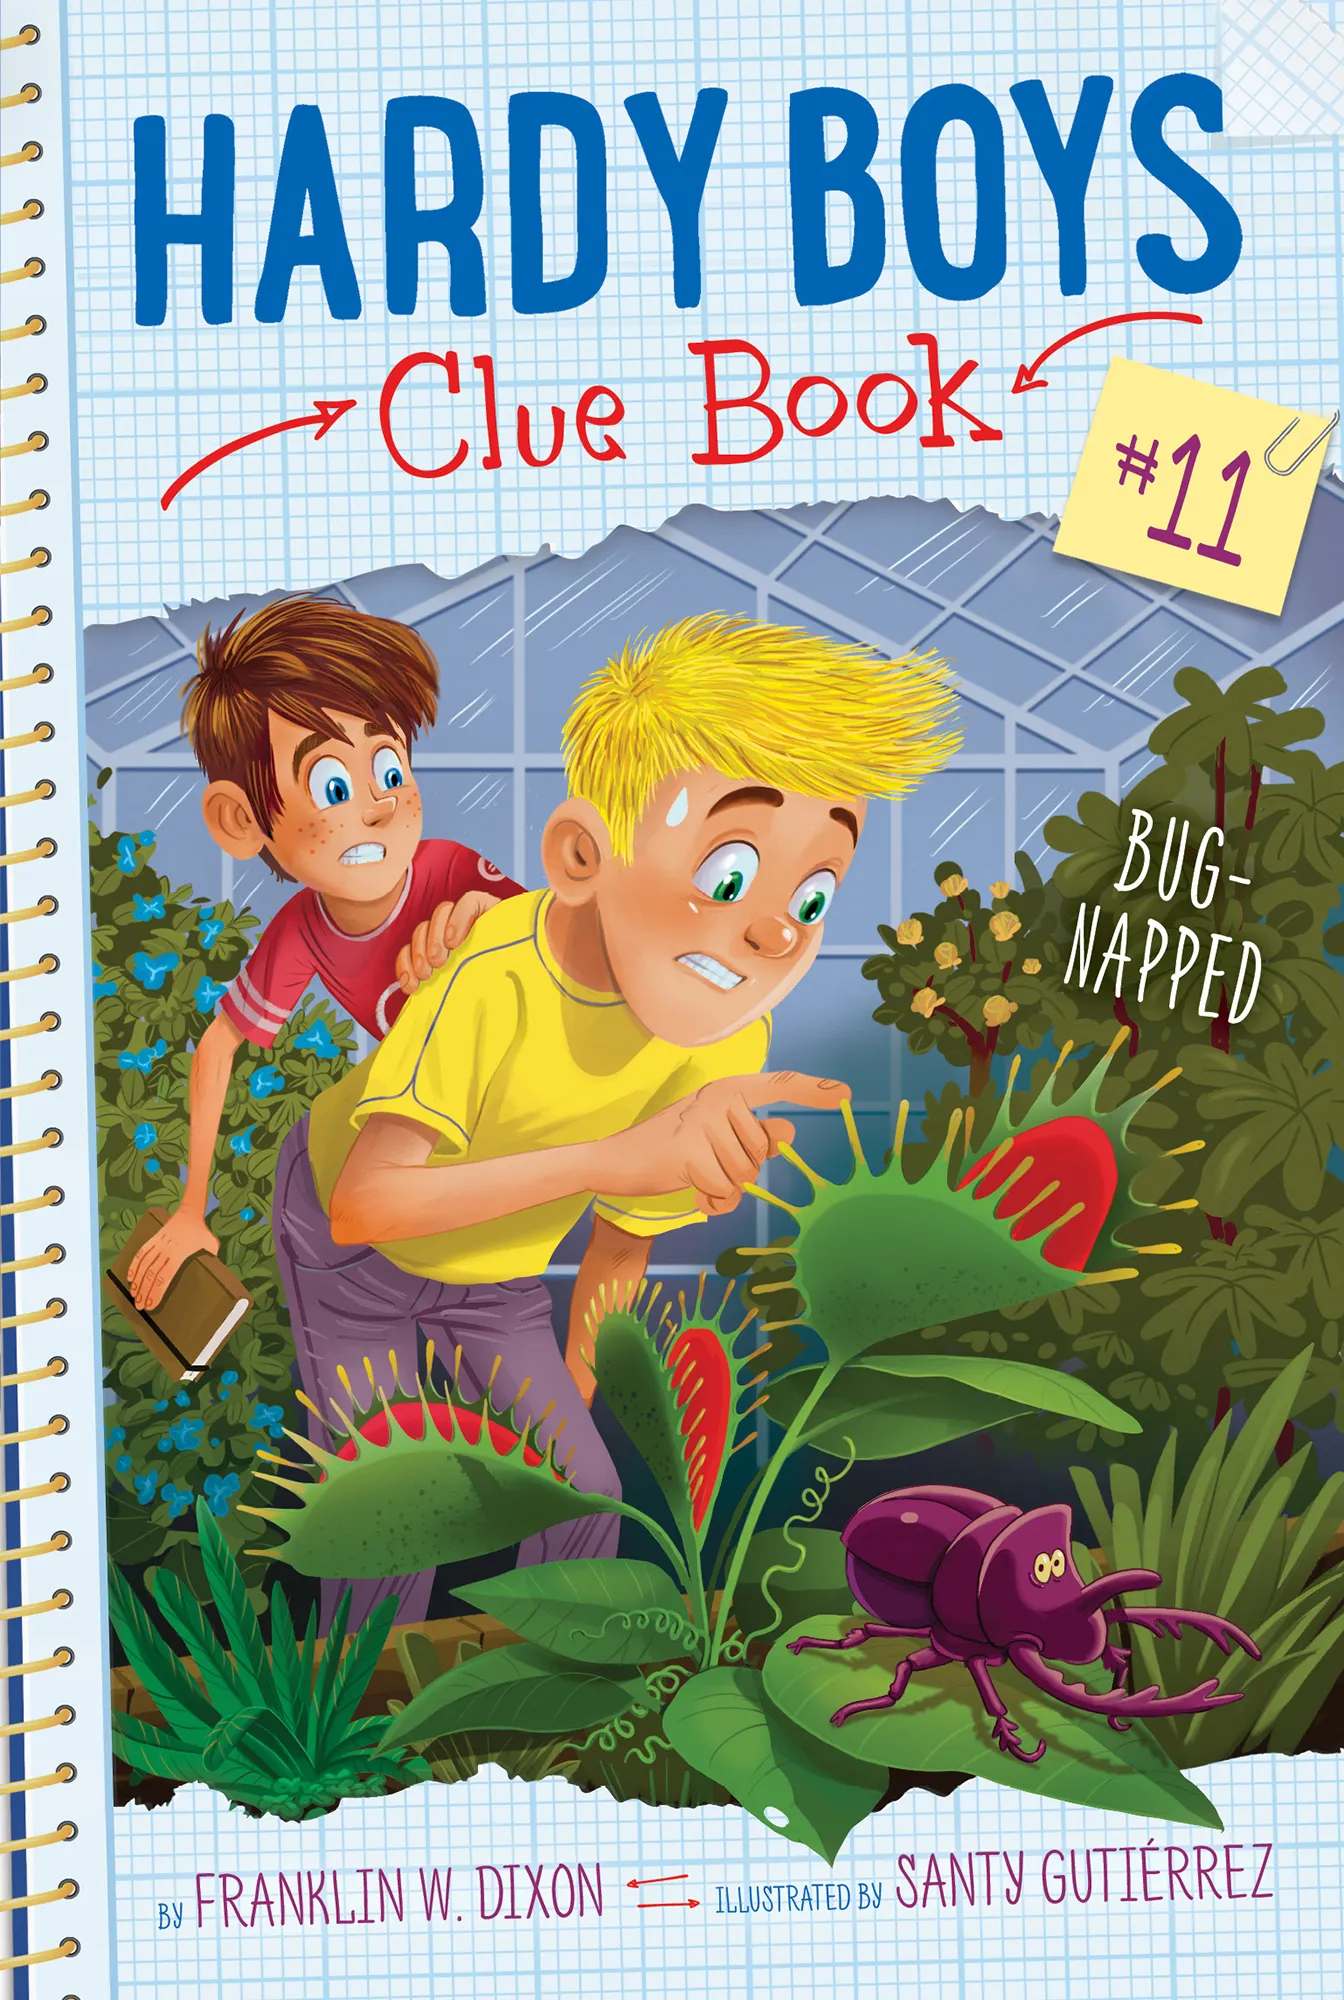 Bug-Napped (Hardy Boys Clue Book #11)